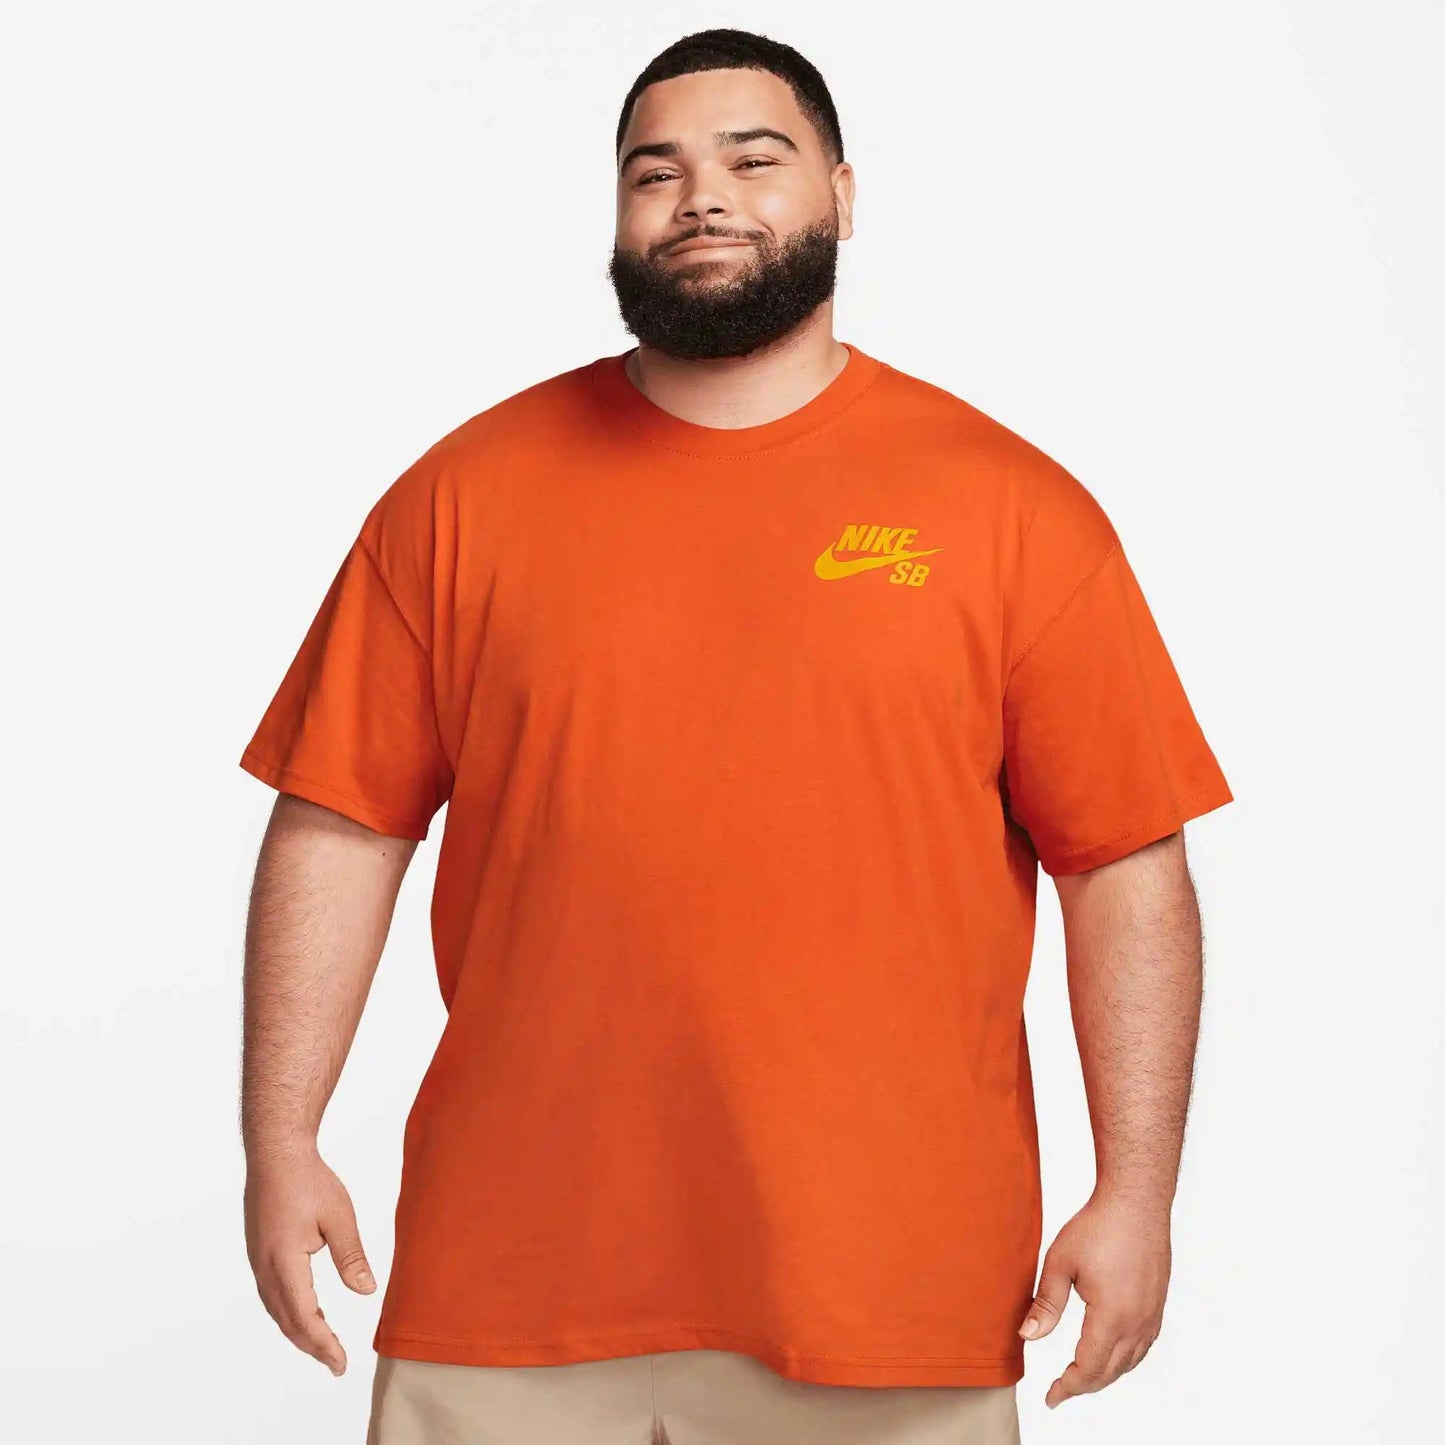 Nike SB Logo Skate T-Shirt, campfire orange - Tiki Room Skateboards - 5